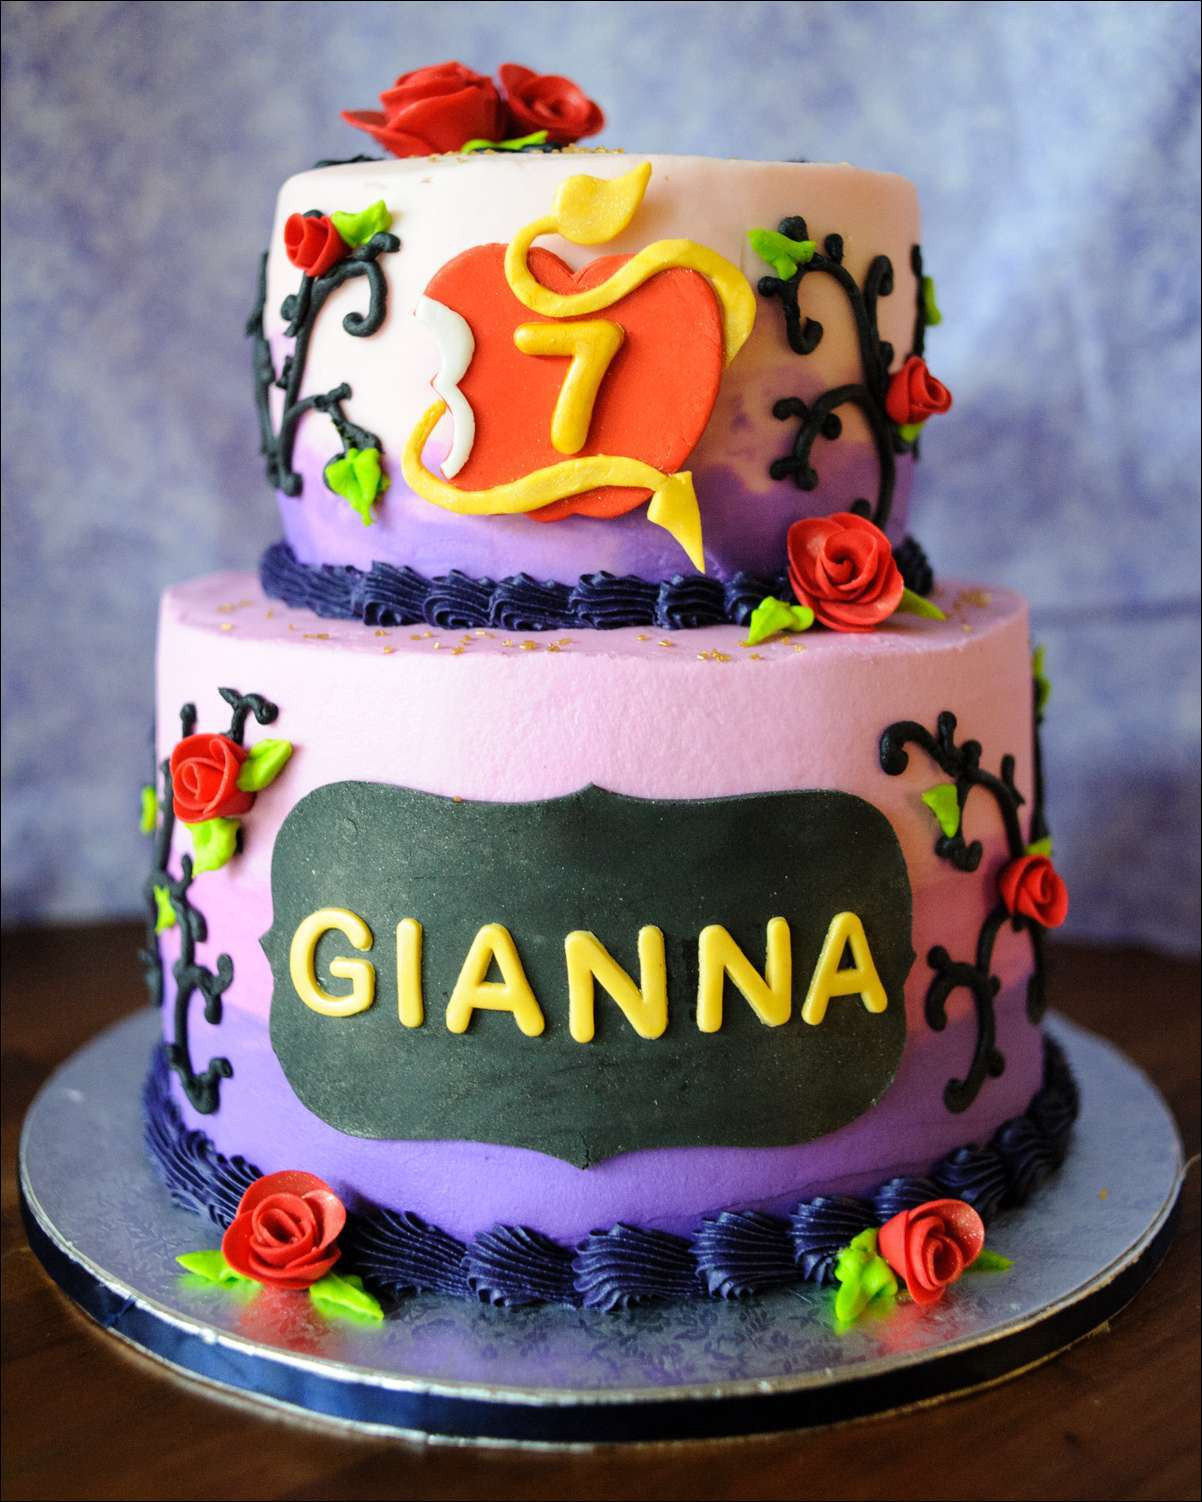 Best ideas about Descendants 2 Birthday Cake
. Save or Pin Disney Descendants Birthday Cake Now.